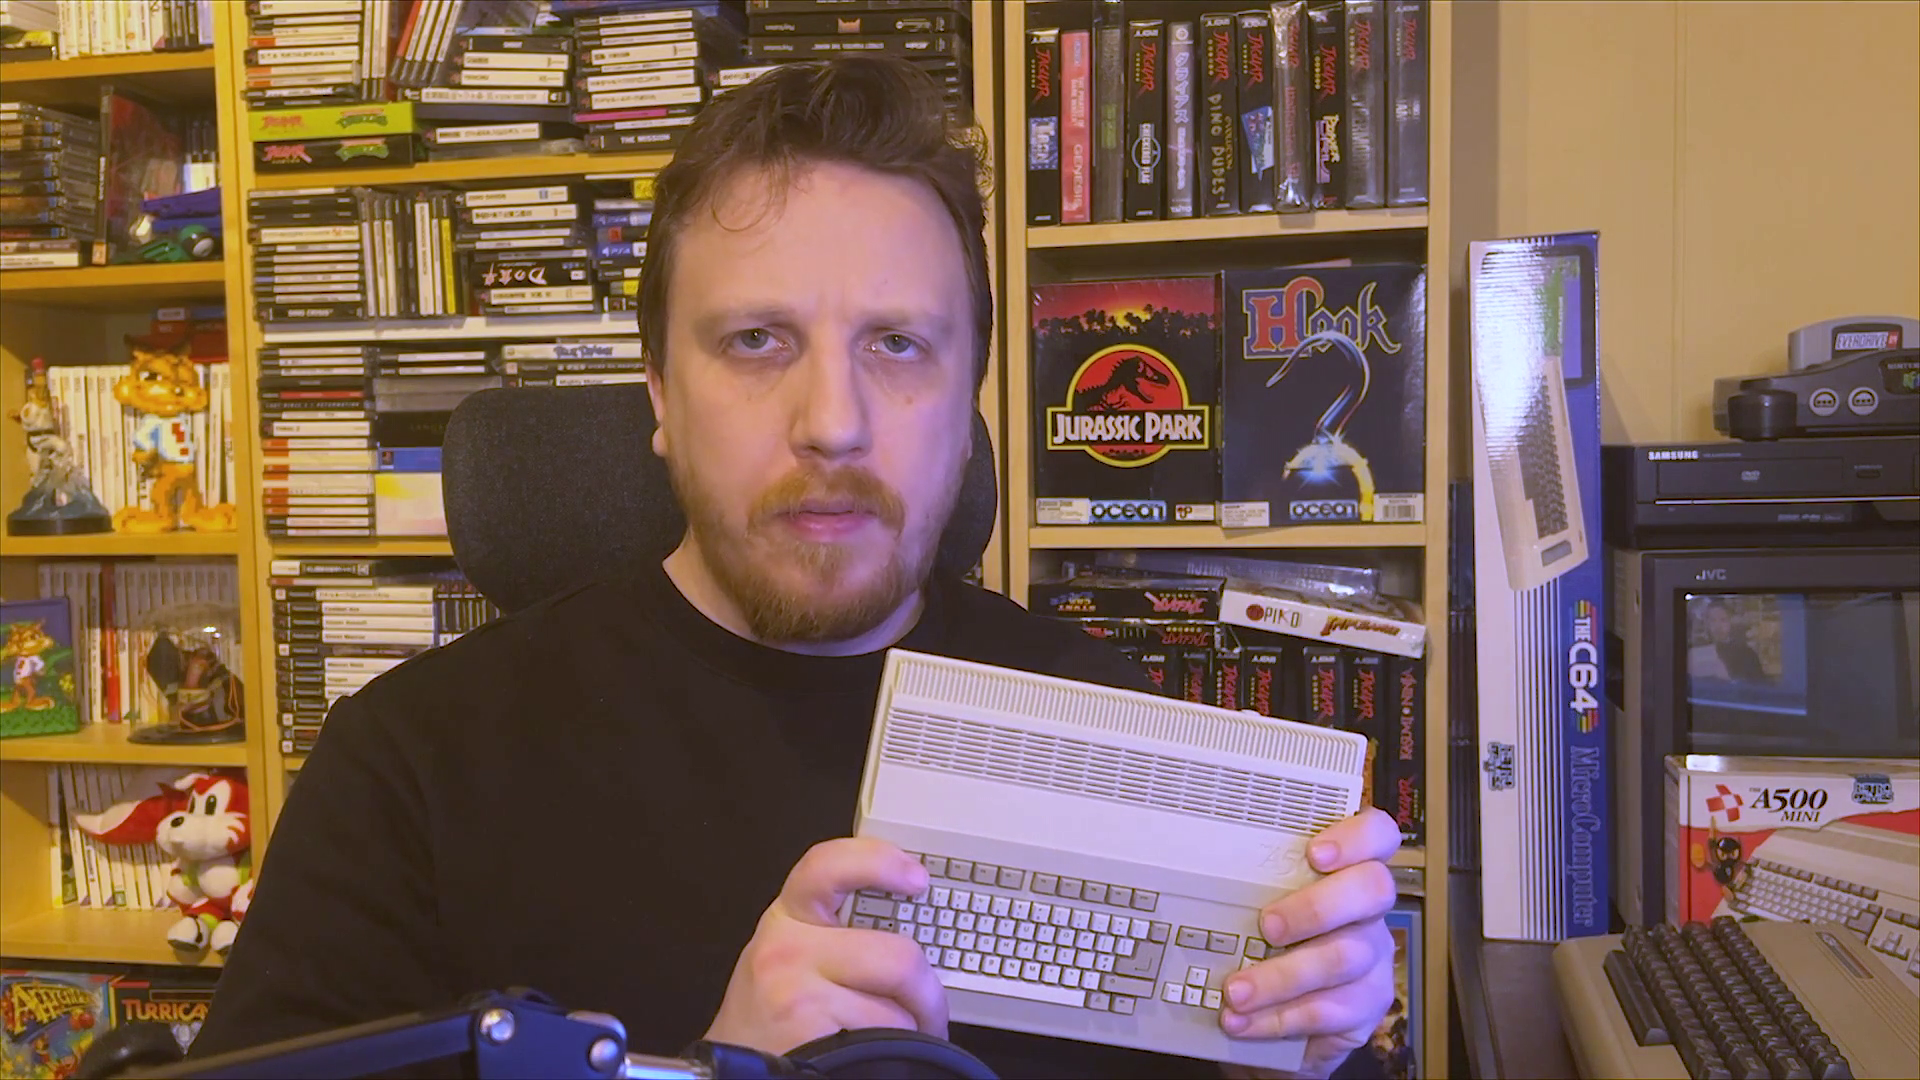 The A500 Mini shown here is a tiny version of the original Commodore Amiga 500.